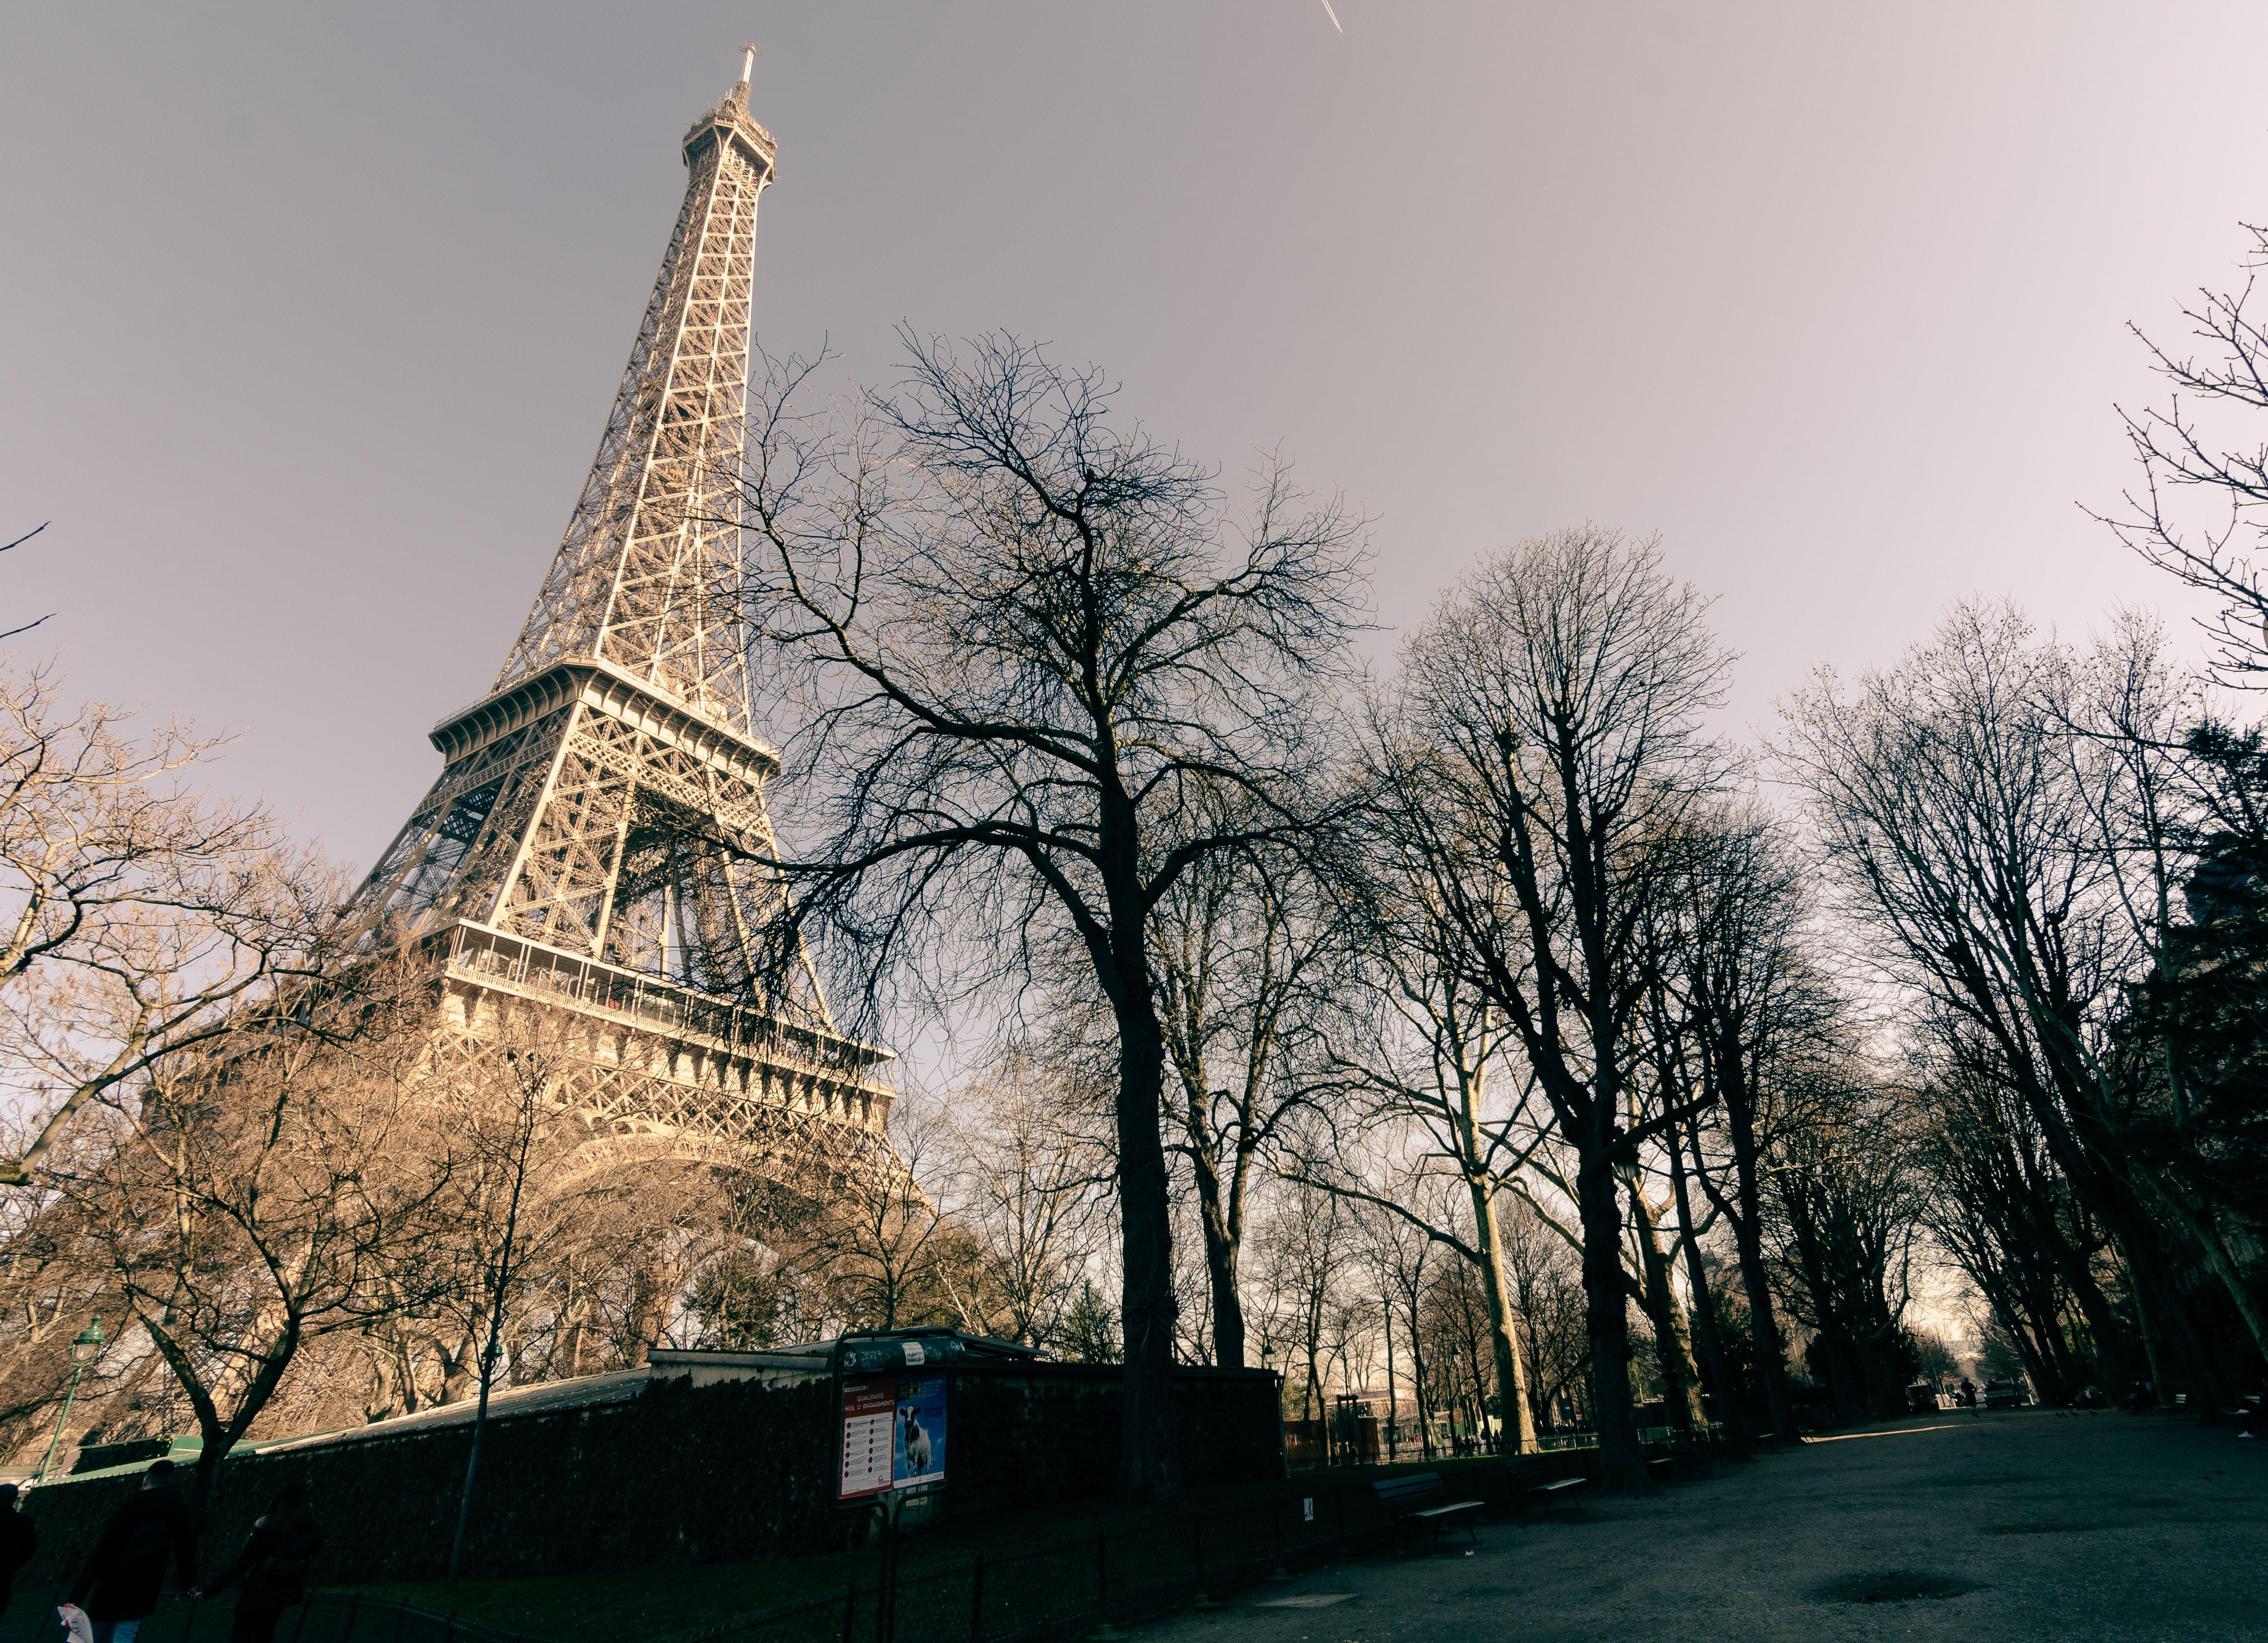 Eiffel Tower in Day